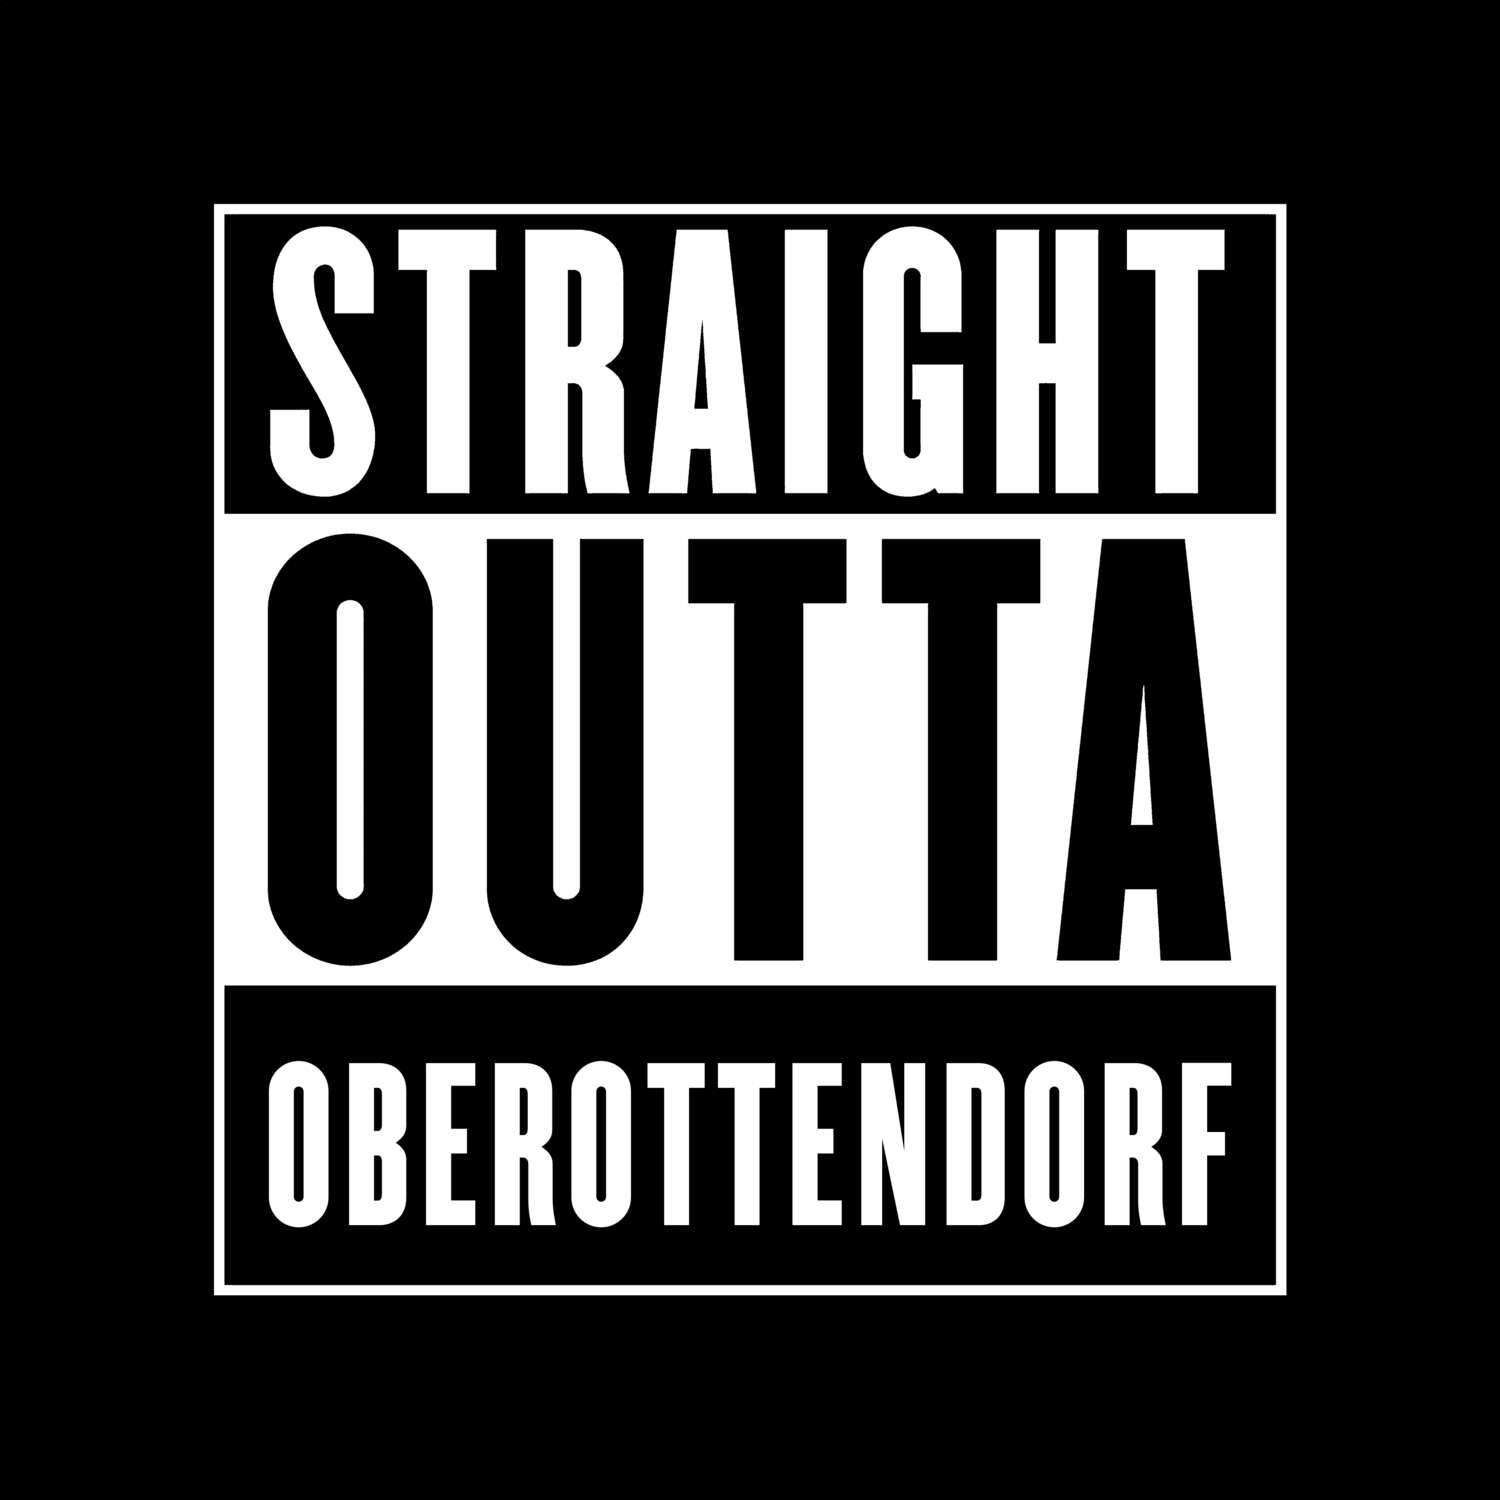 Oberottendorf T-Shirt »Straight Outta«